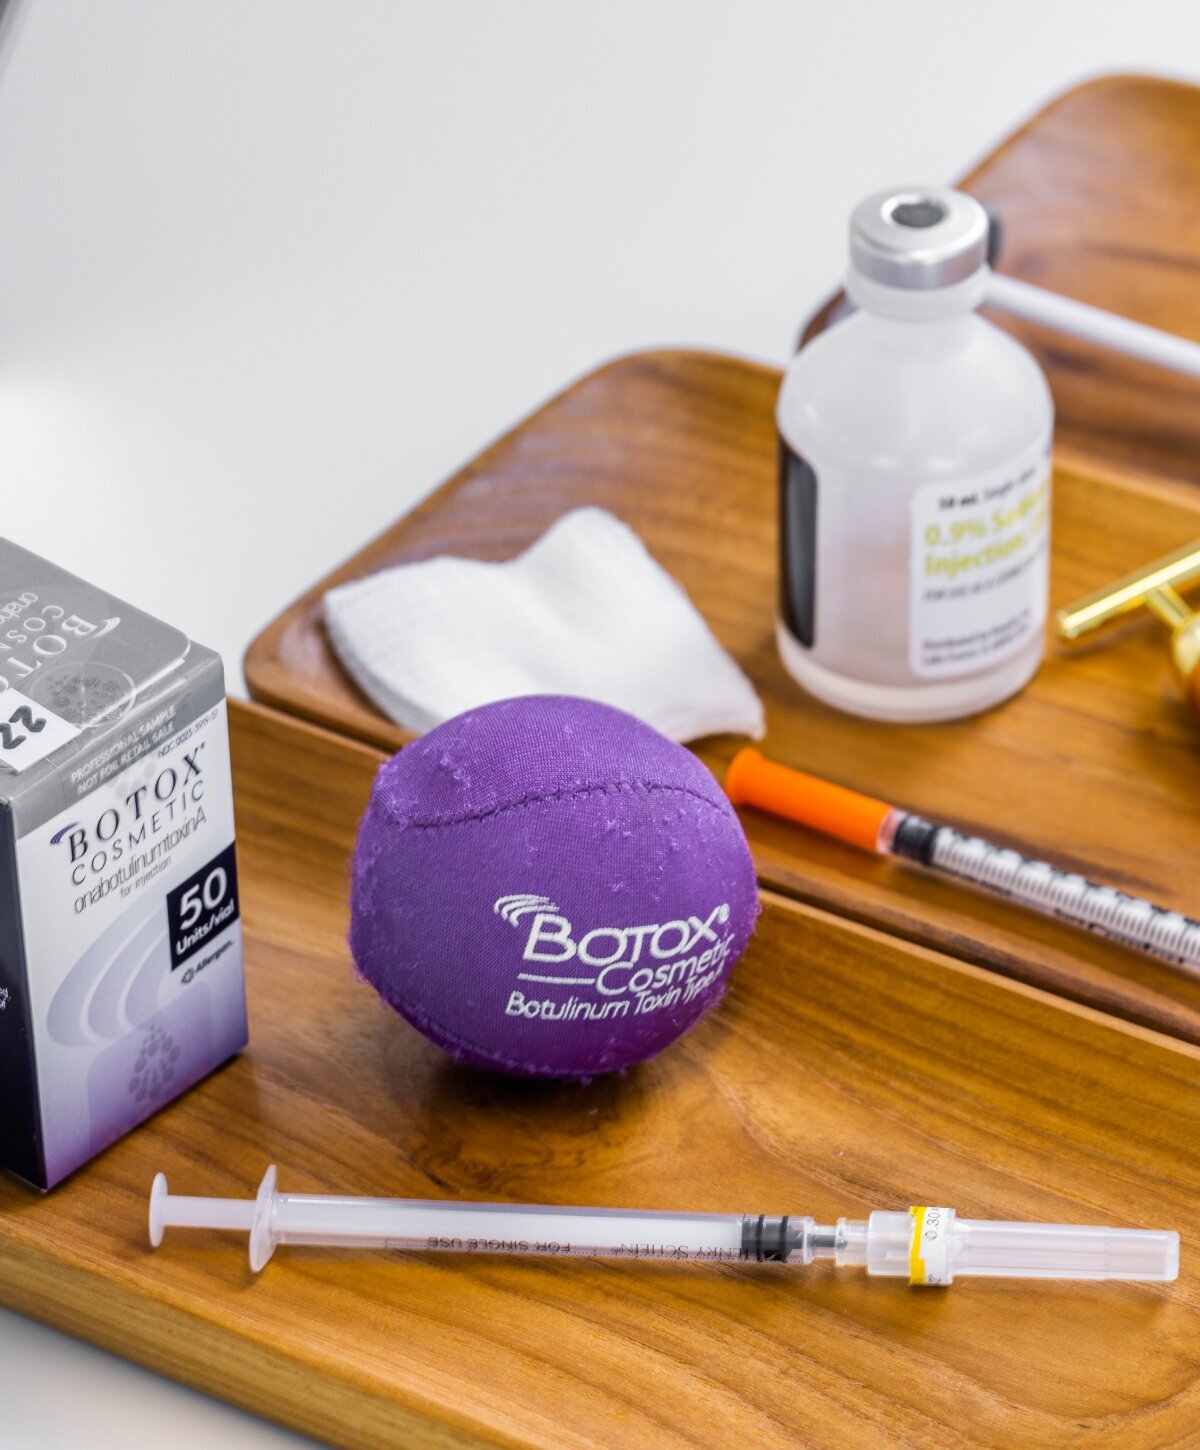 Boca Raton Facial Implants injection kit